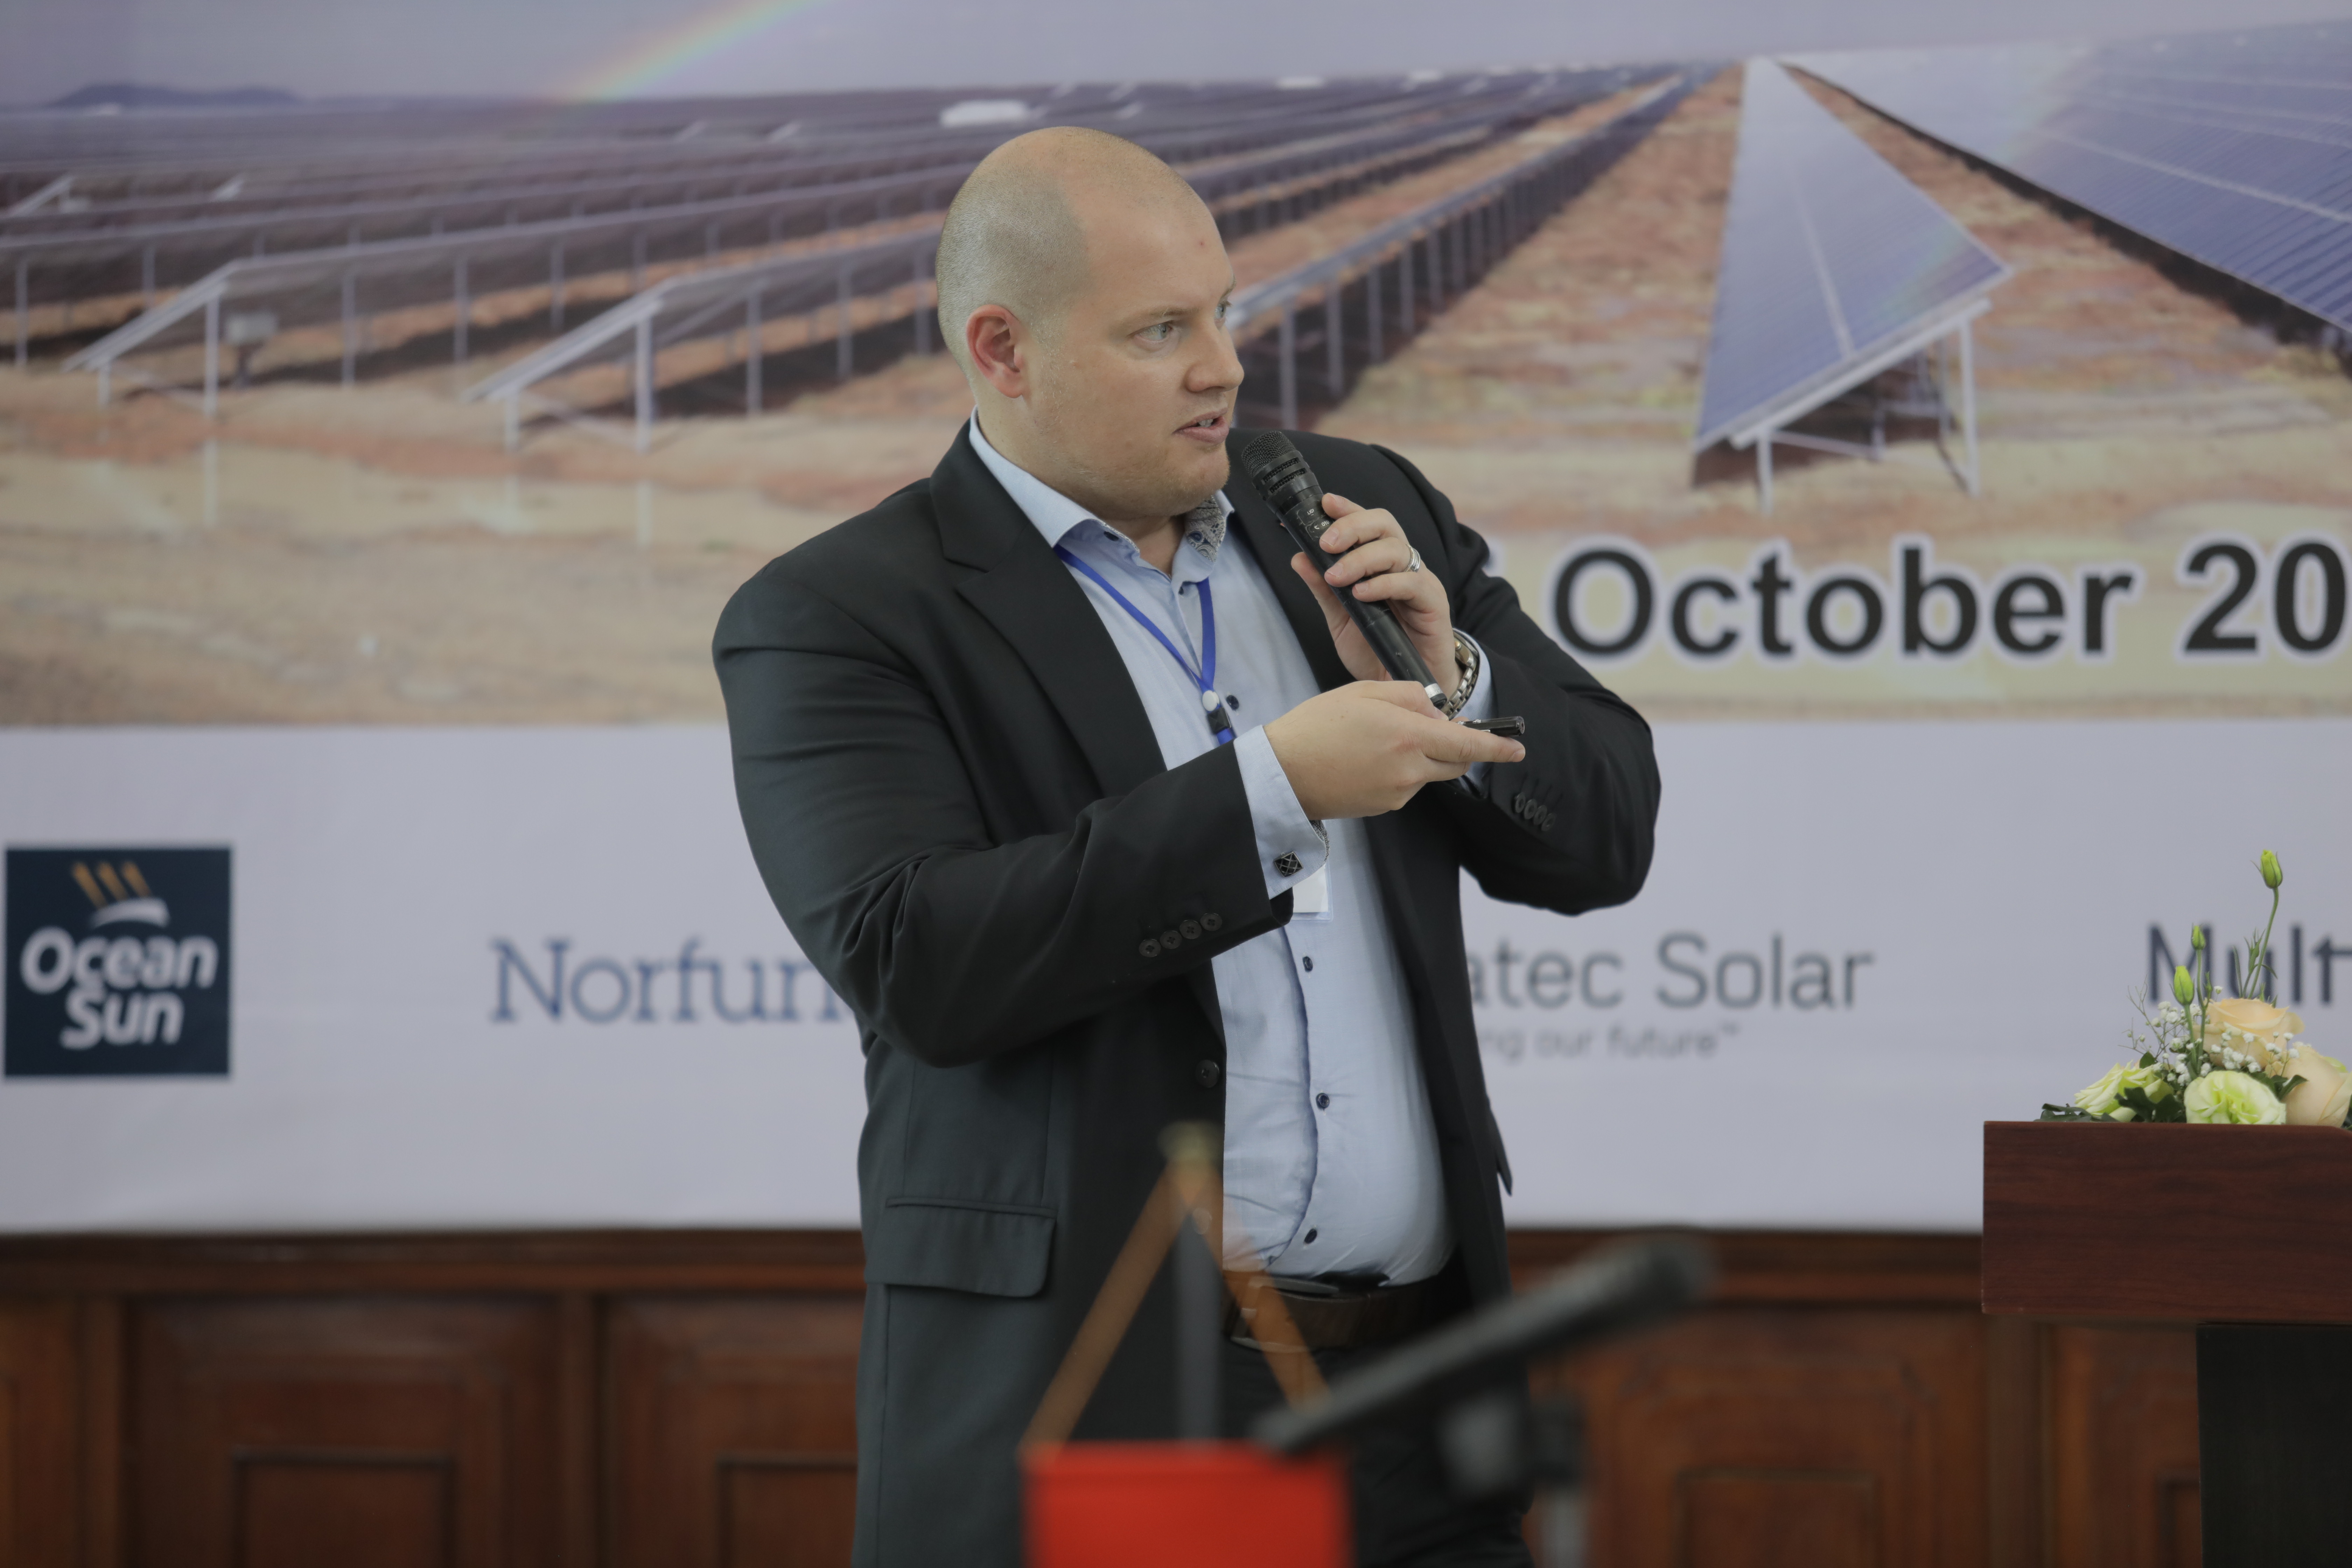 Are Gløersen presented Ocean Sun at the Norwegian Solar Seminar in Hanoi